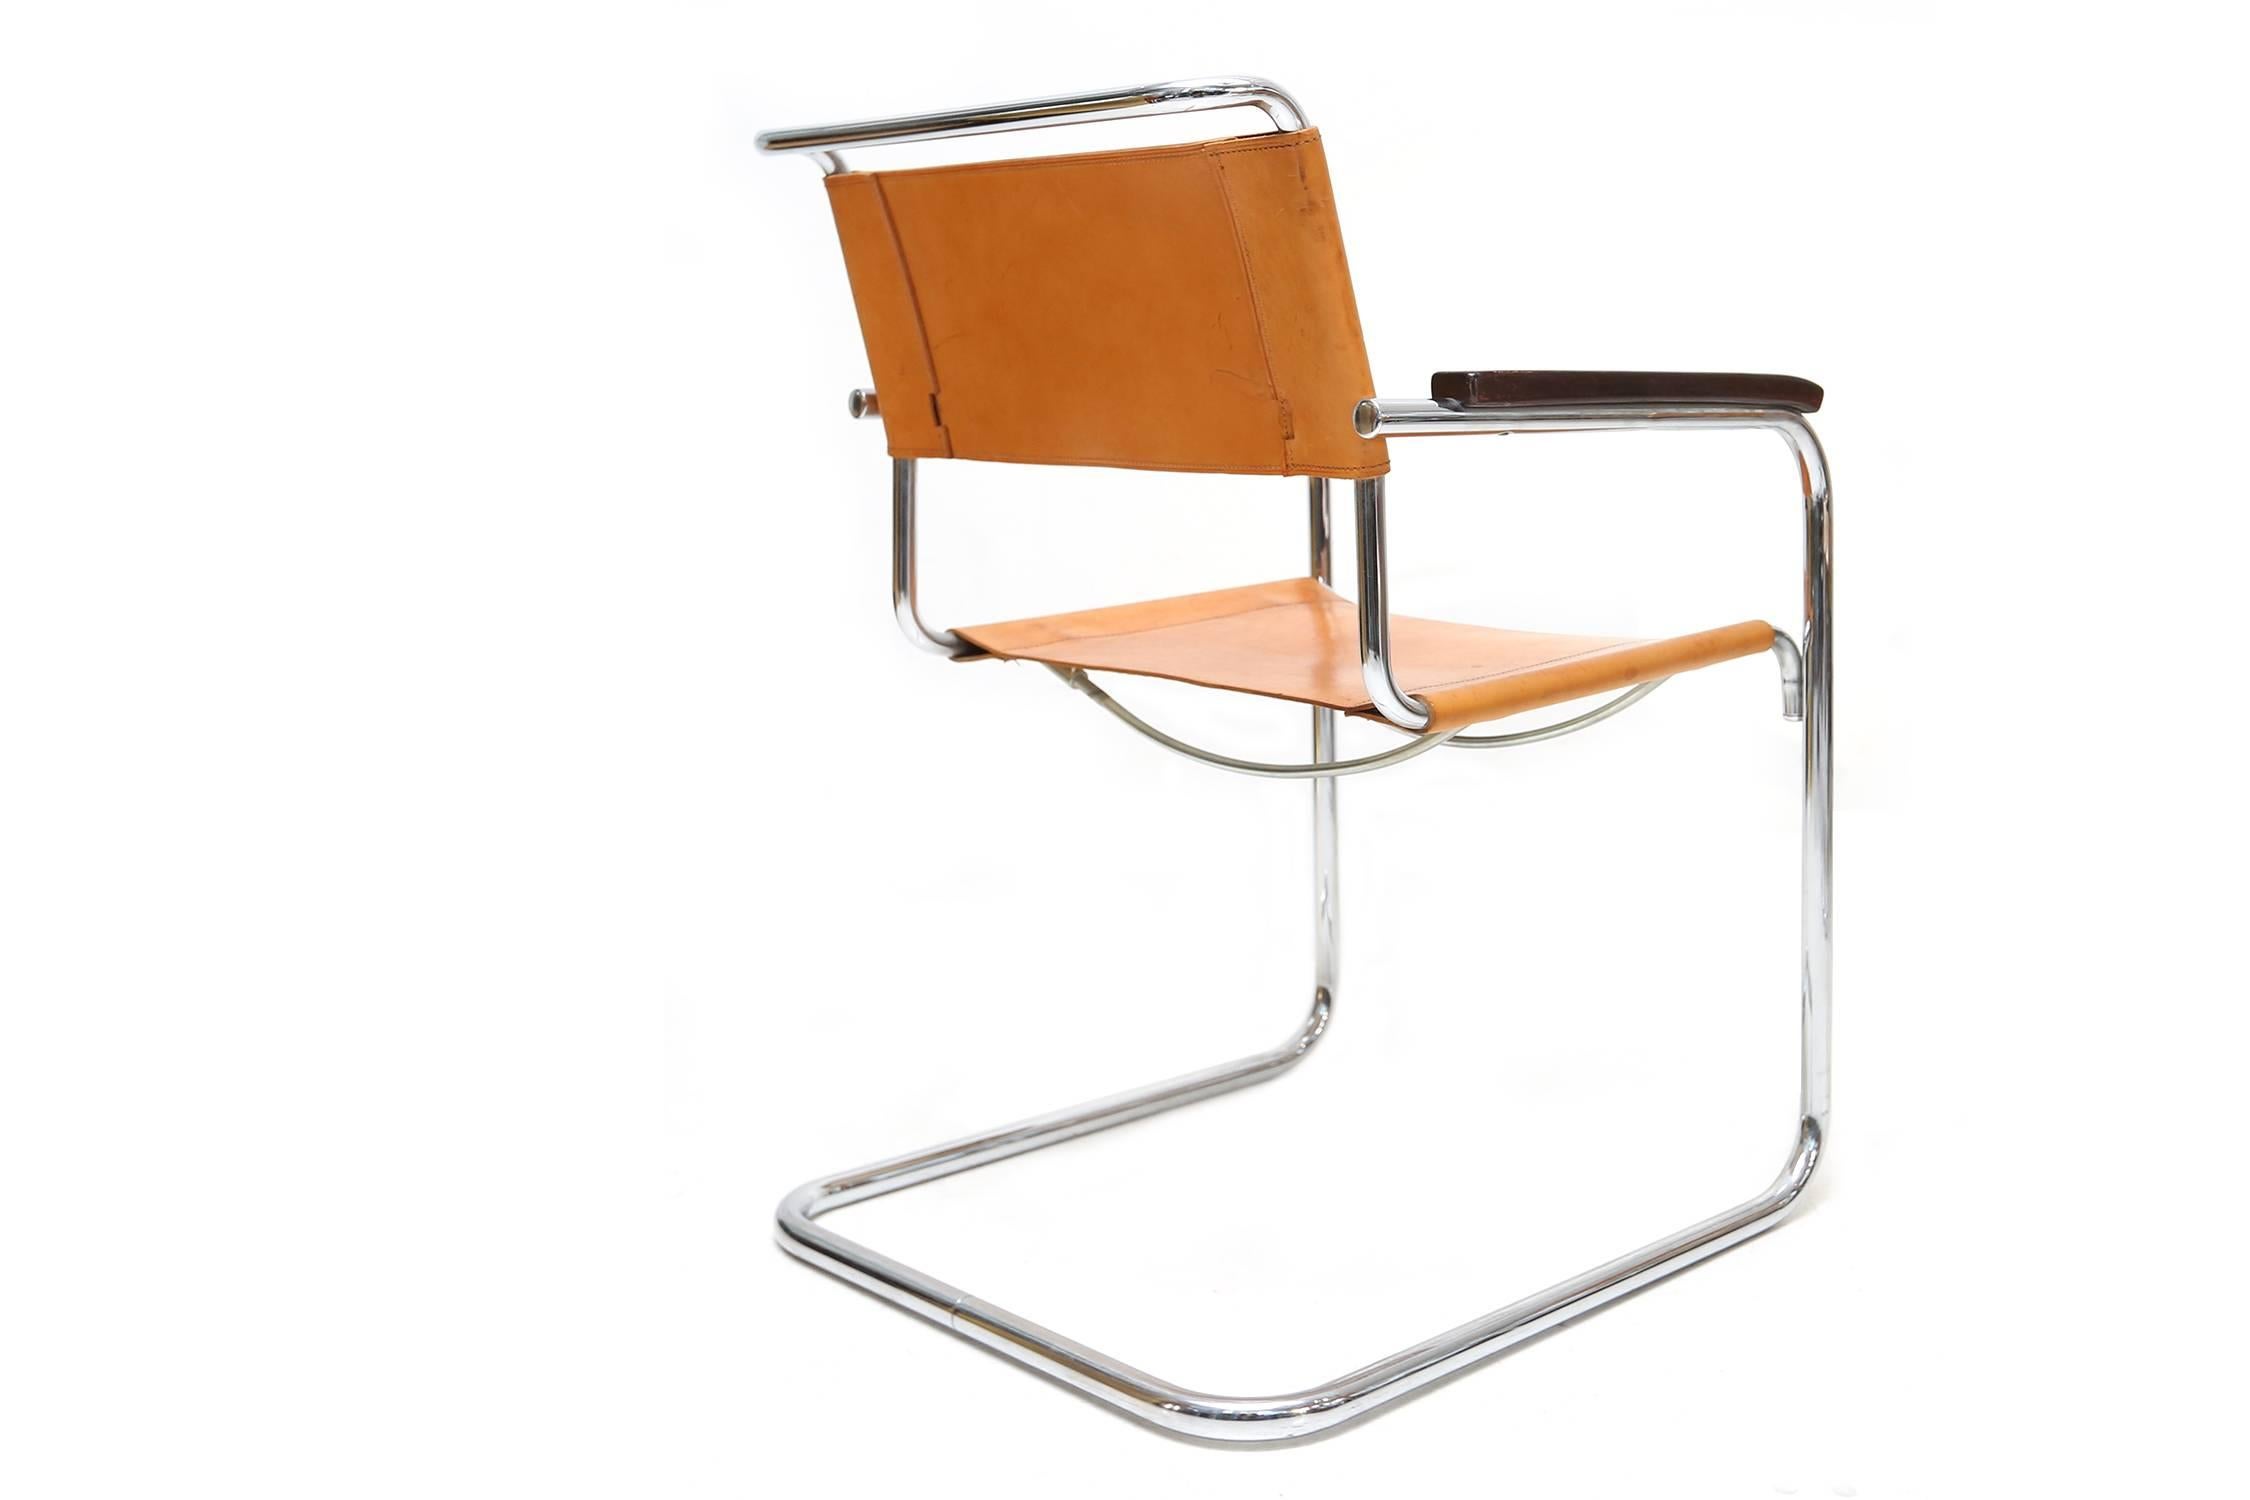 Cantilever chrome-plated tubular steel chair
Cognac Leather seating
Model B34  Marcel Breuer  Thonet
H 85 cm W 44 cm D 40 cm